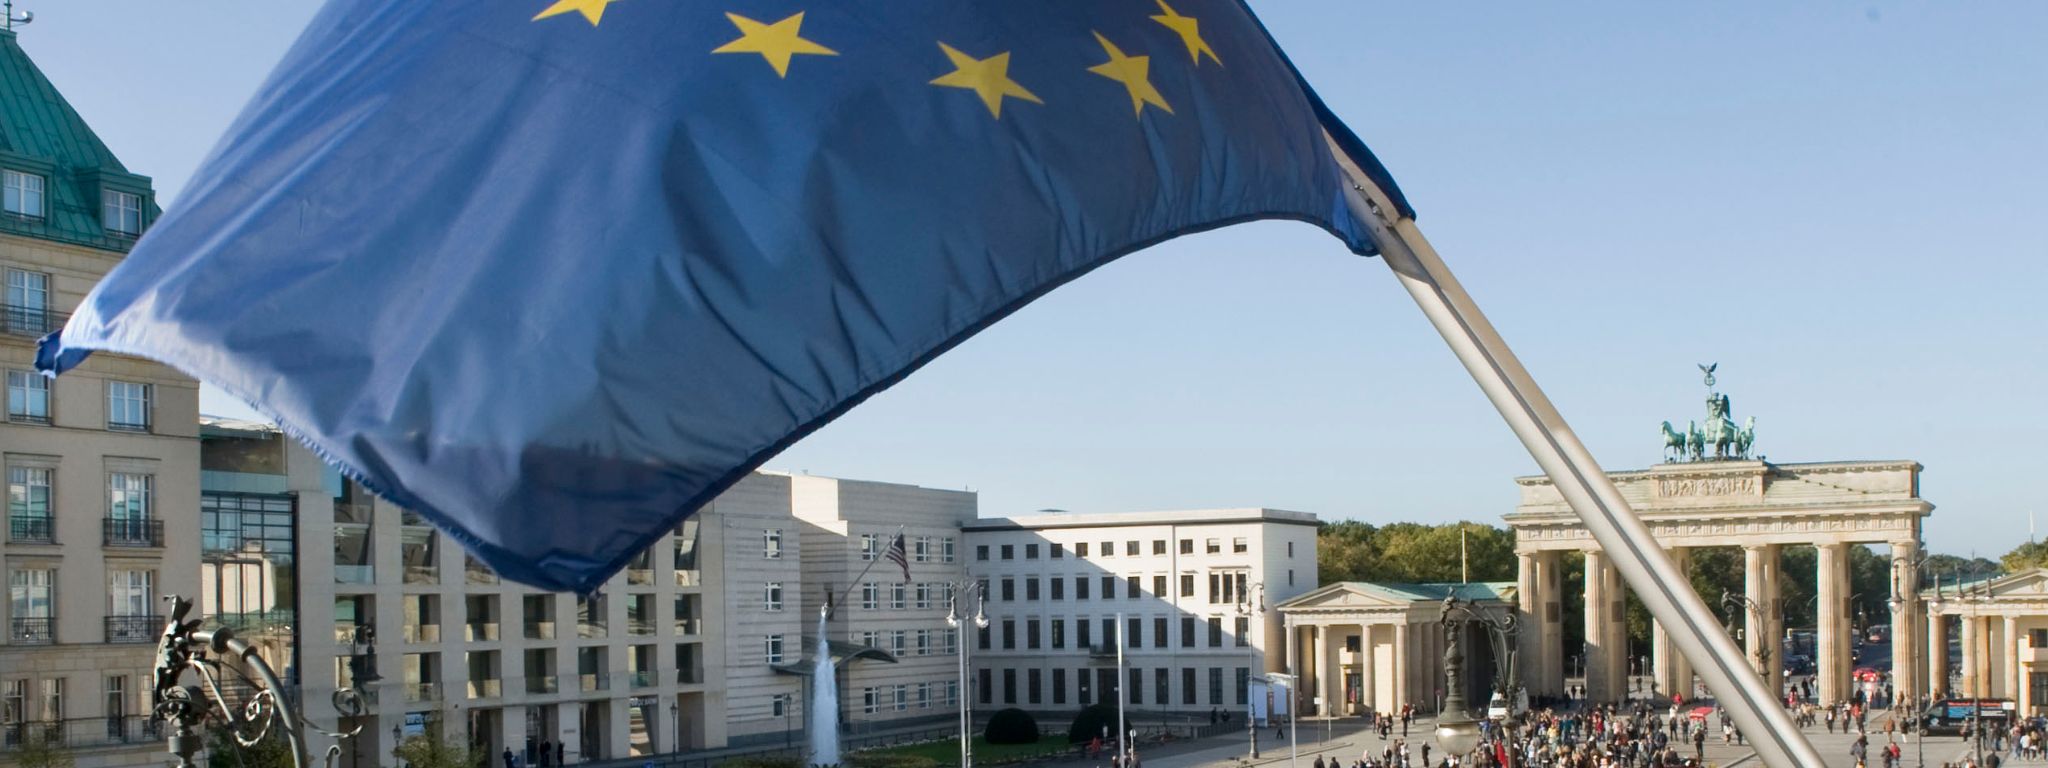 EU-Flagge weht vor dem Brandenburger Tor in Berlin